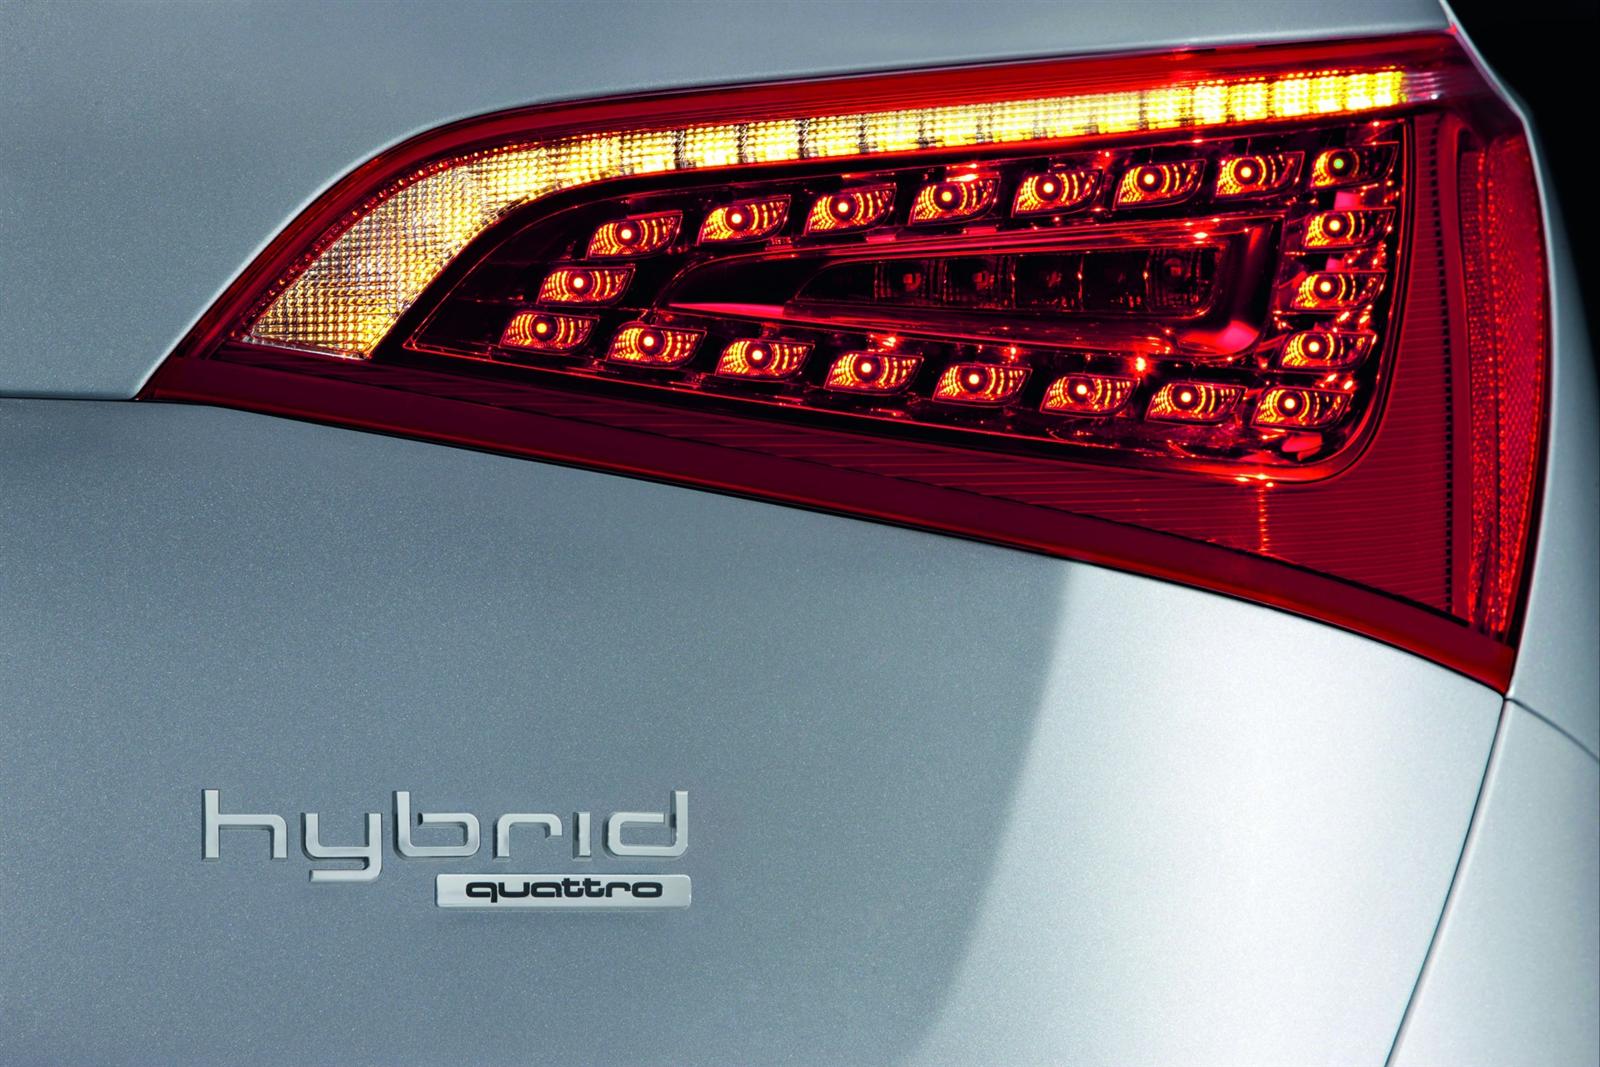 2011 Audi Q5 Hybrid